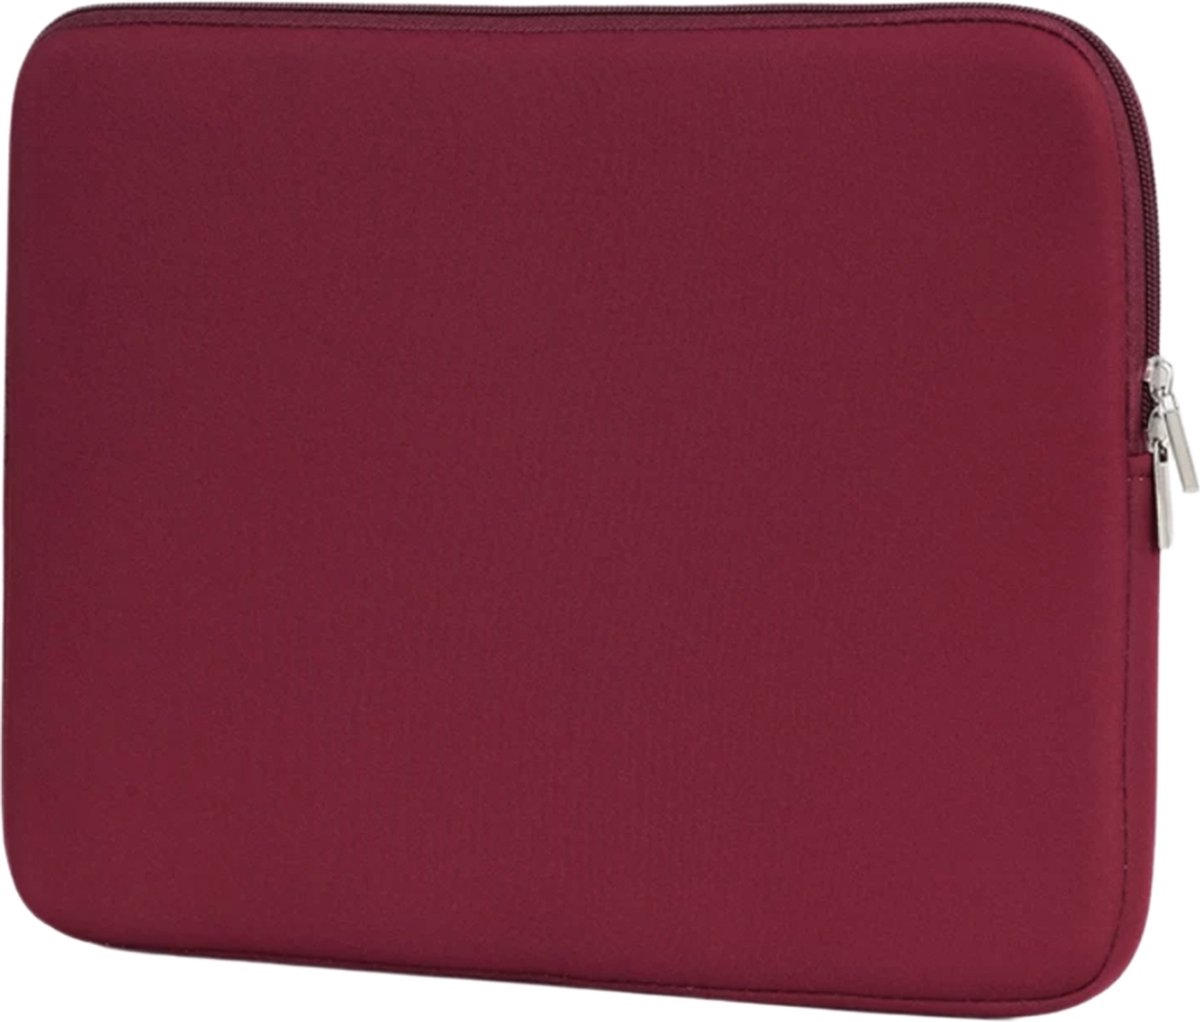 Laptoptas – case – 14,6 inch – stevige kwaliteit – soft touch – bordeaux rood - unisex - spatwaterbestending